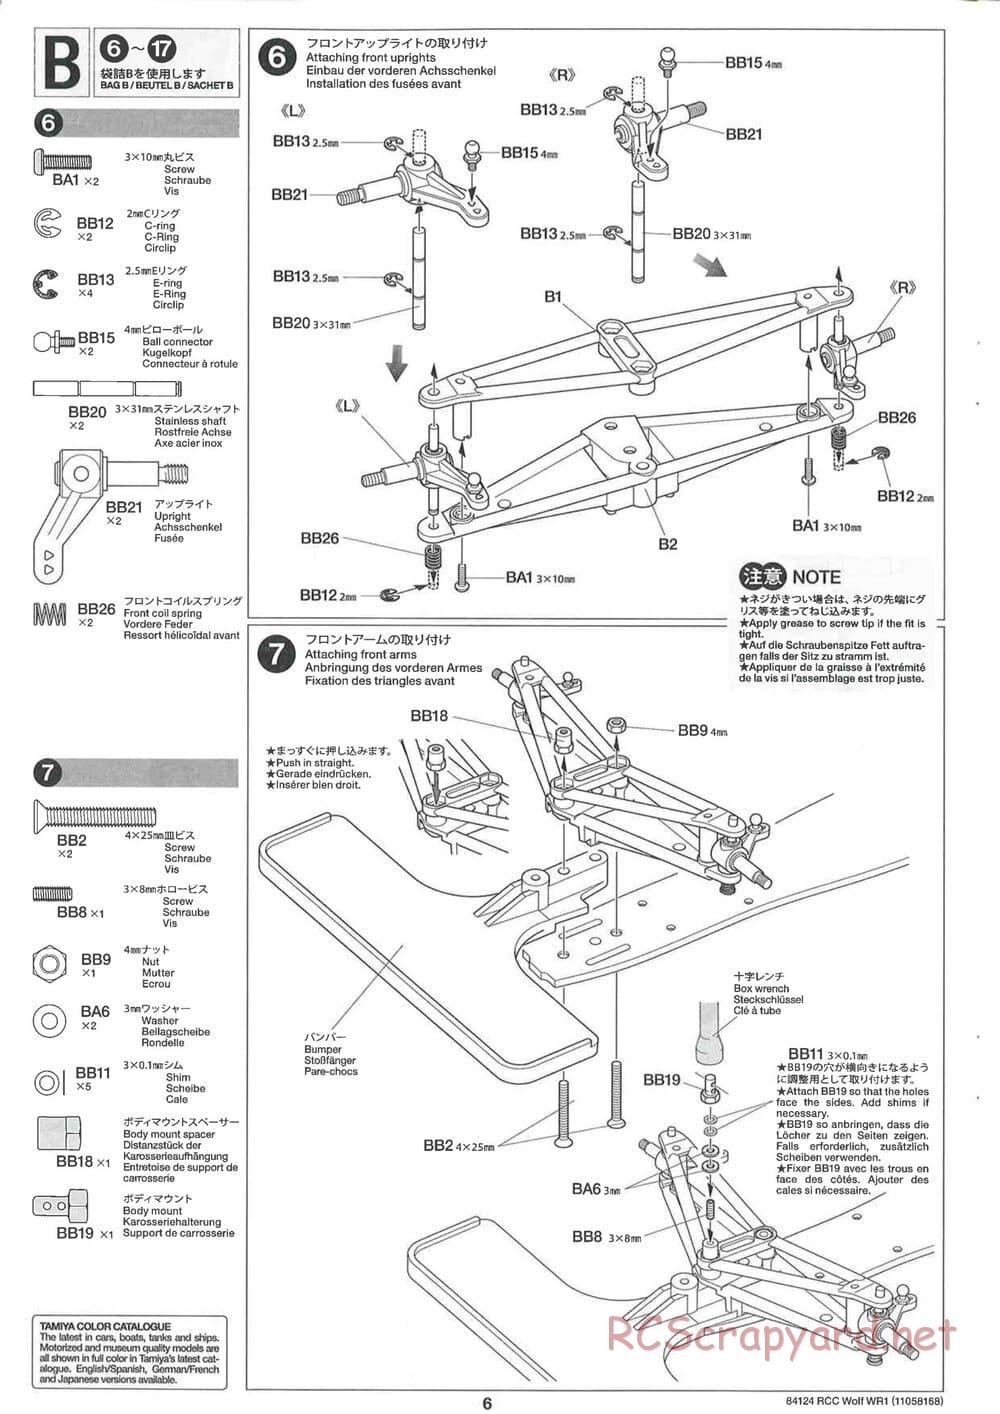 Tamiya - Wolf WR1 - F104W Chassis - Manual - Page 6